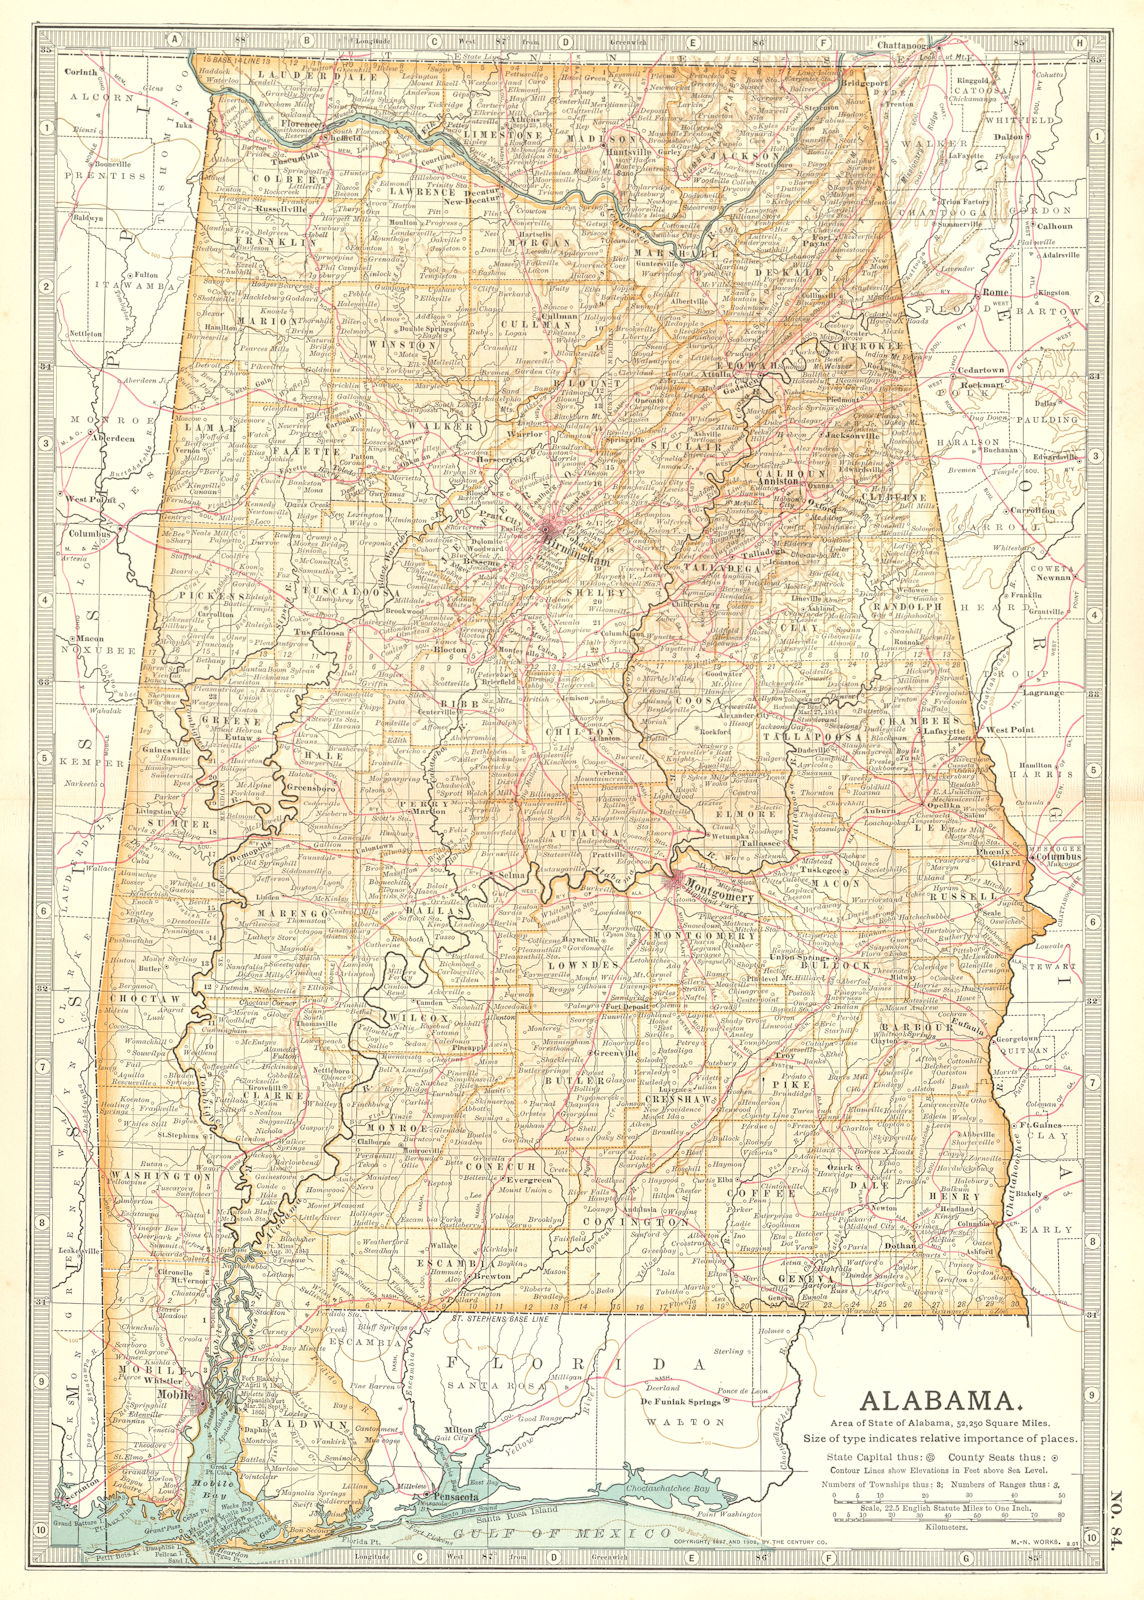 Associate Product ALABAMA. State map. Counties. Shows civil war battlefields. Britannica 1903